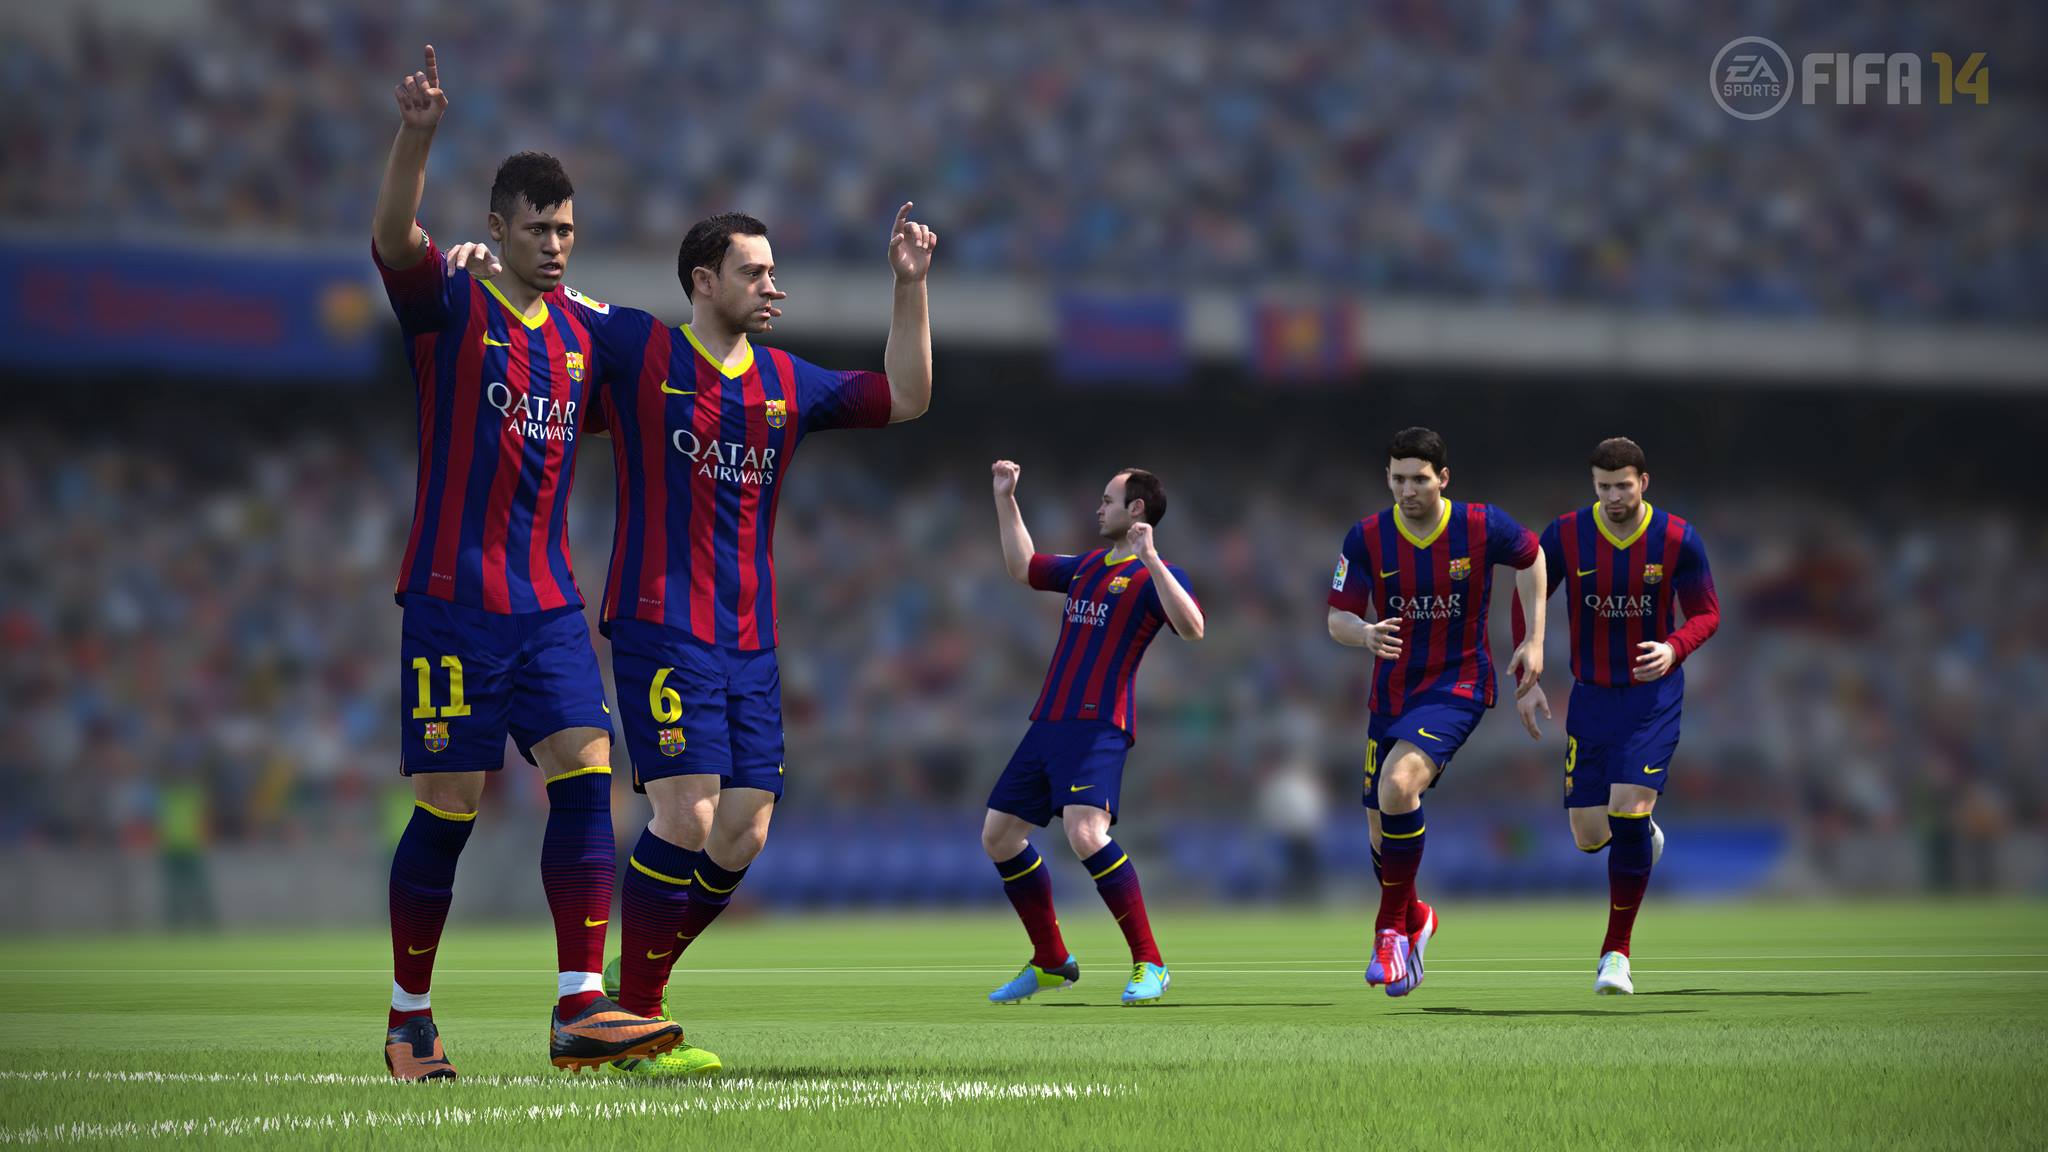 Best FIFA 14 formation for Barcelona